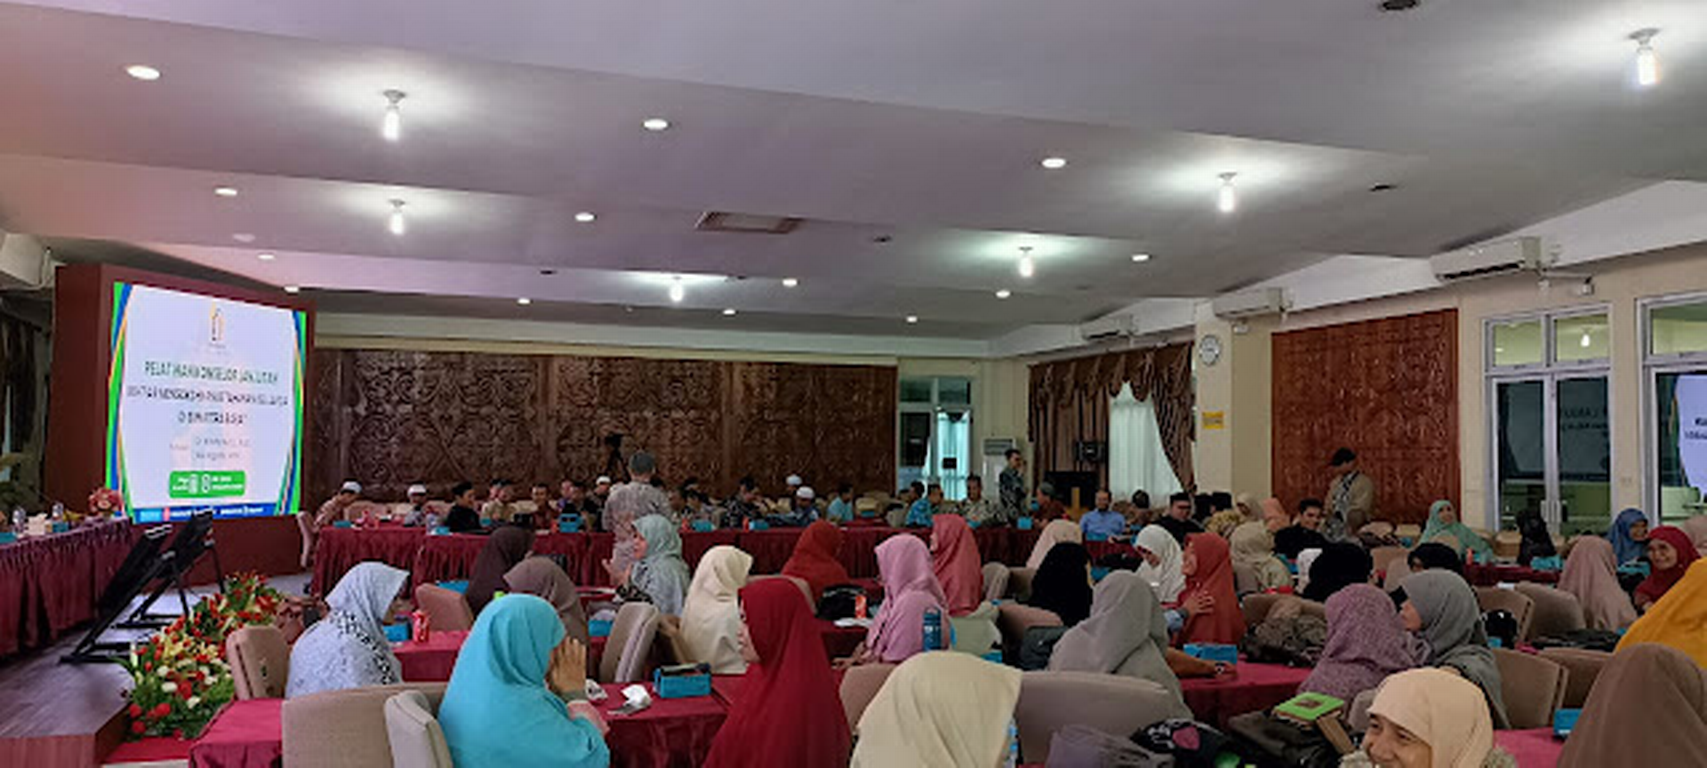 Acara pelatihan konselor lanjutan yang digelar Dewan Syariah Wilayah (DSW) PKS Sumatera Barat.